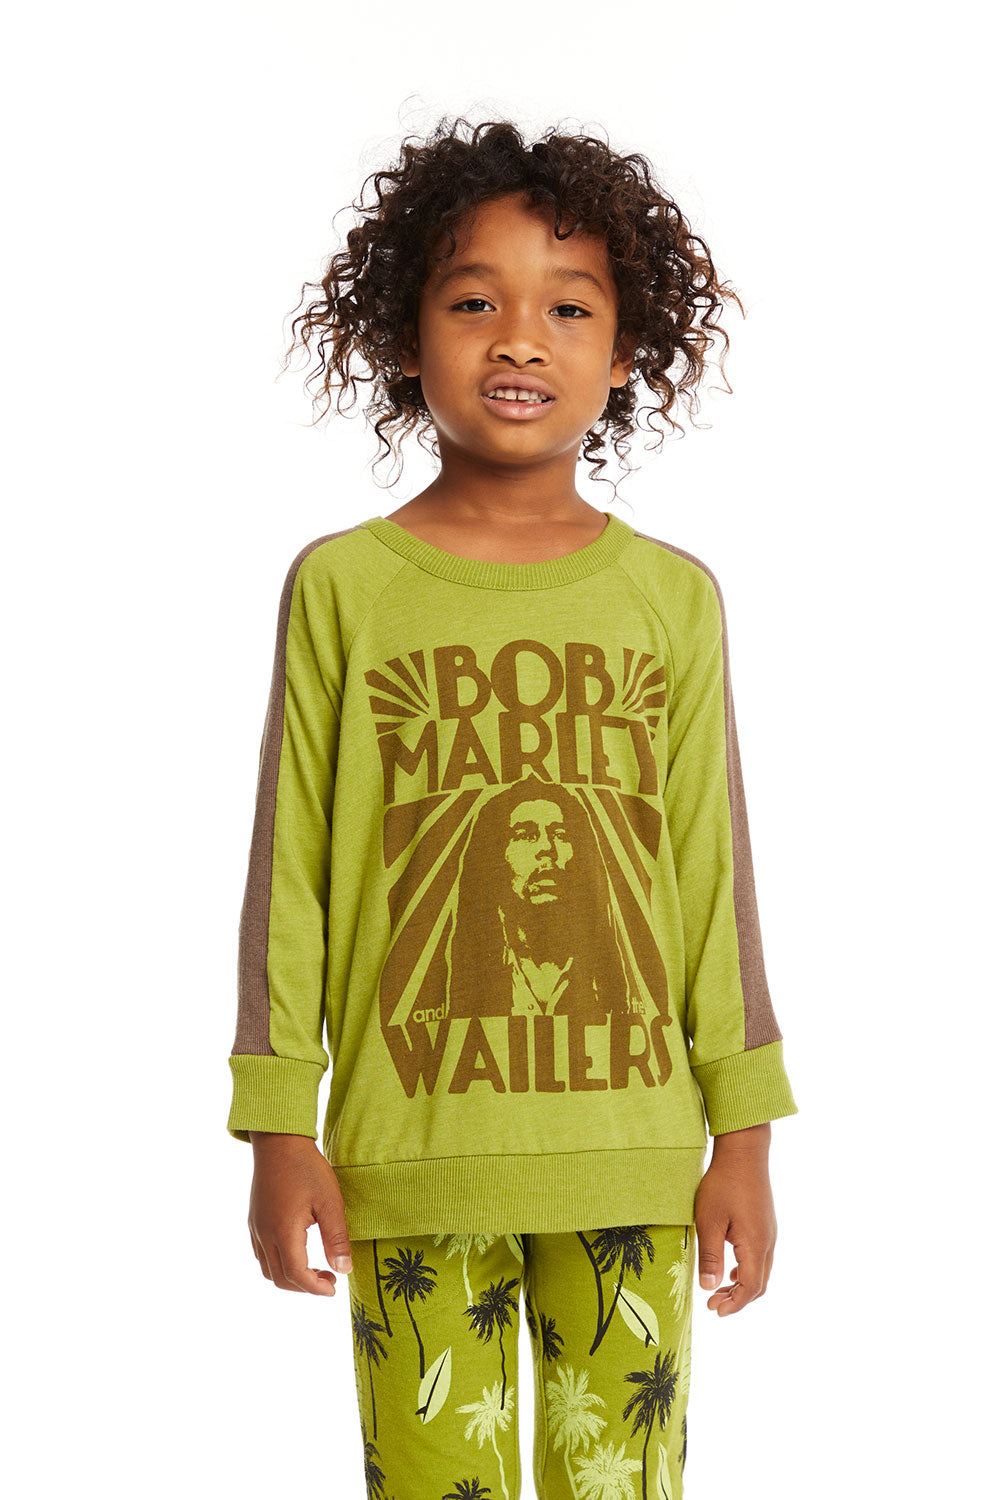 Bob Marley and The Wailers Long Sleeve BOYS chaserbrand